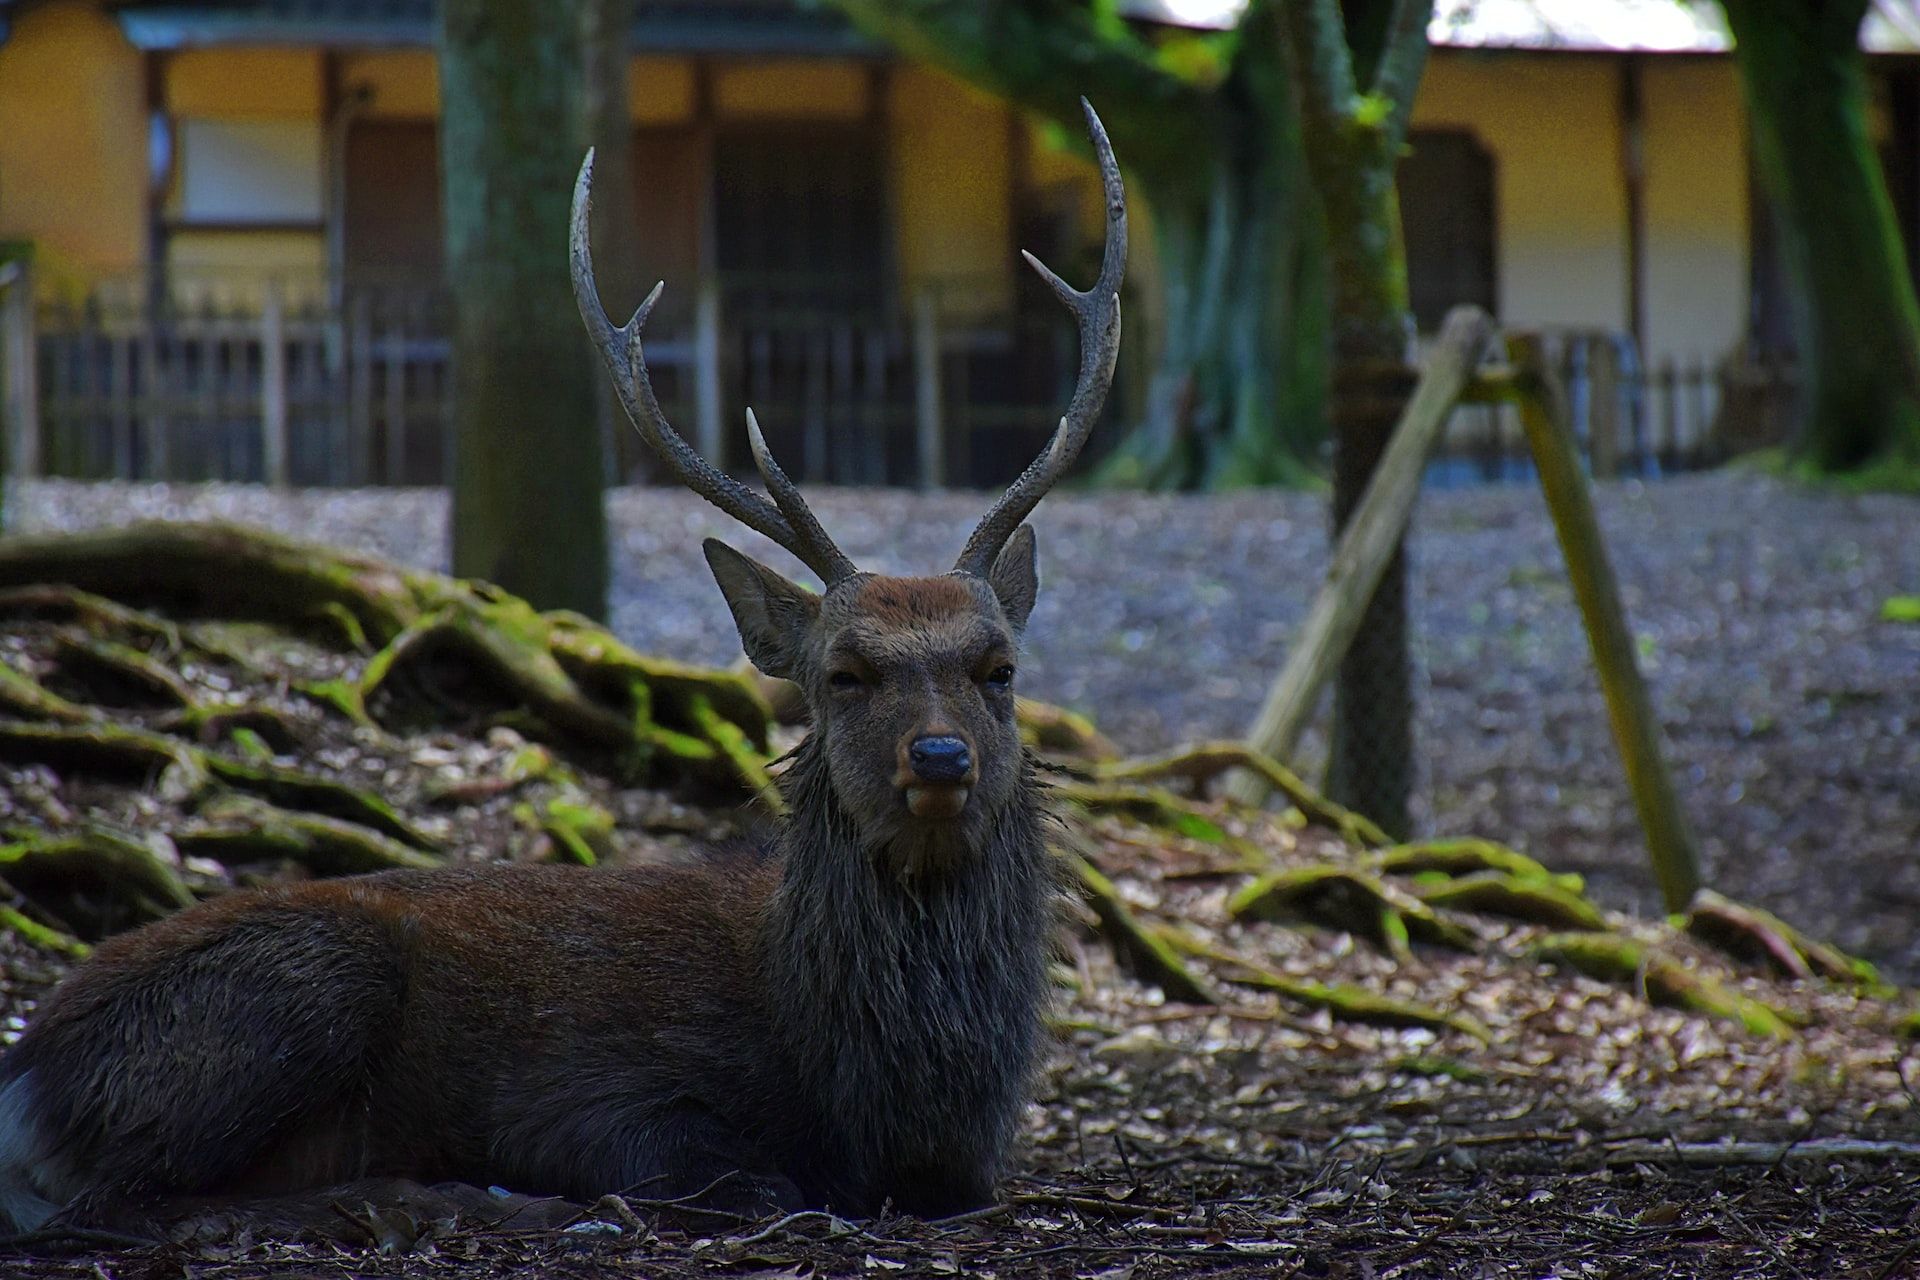 A male deer relaxing in the park in Nara, Japan